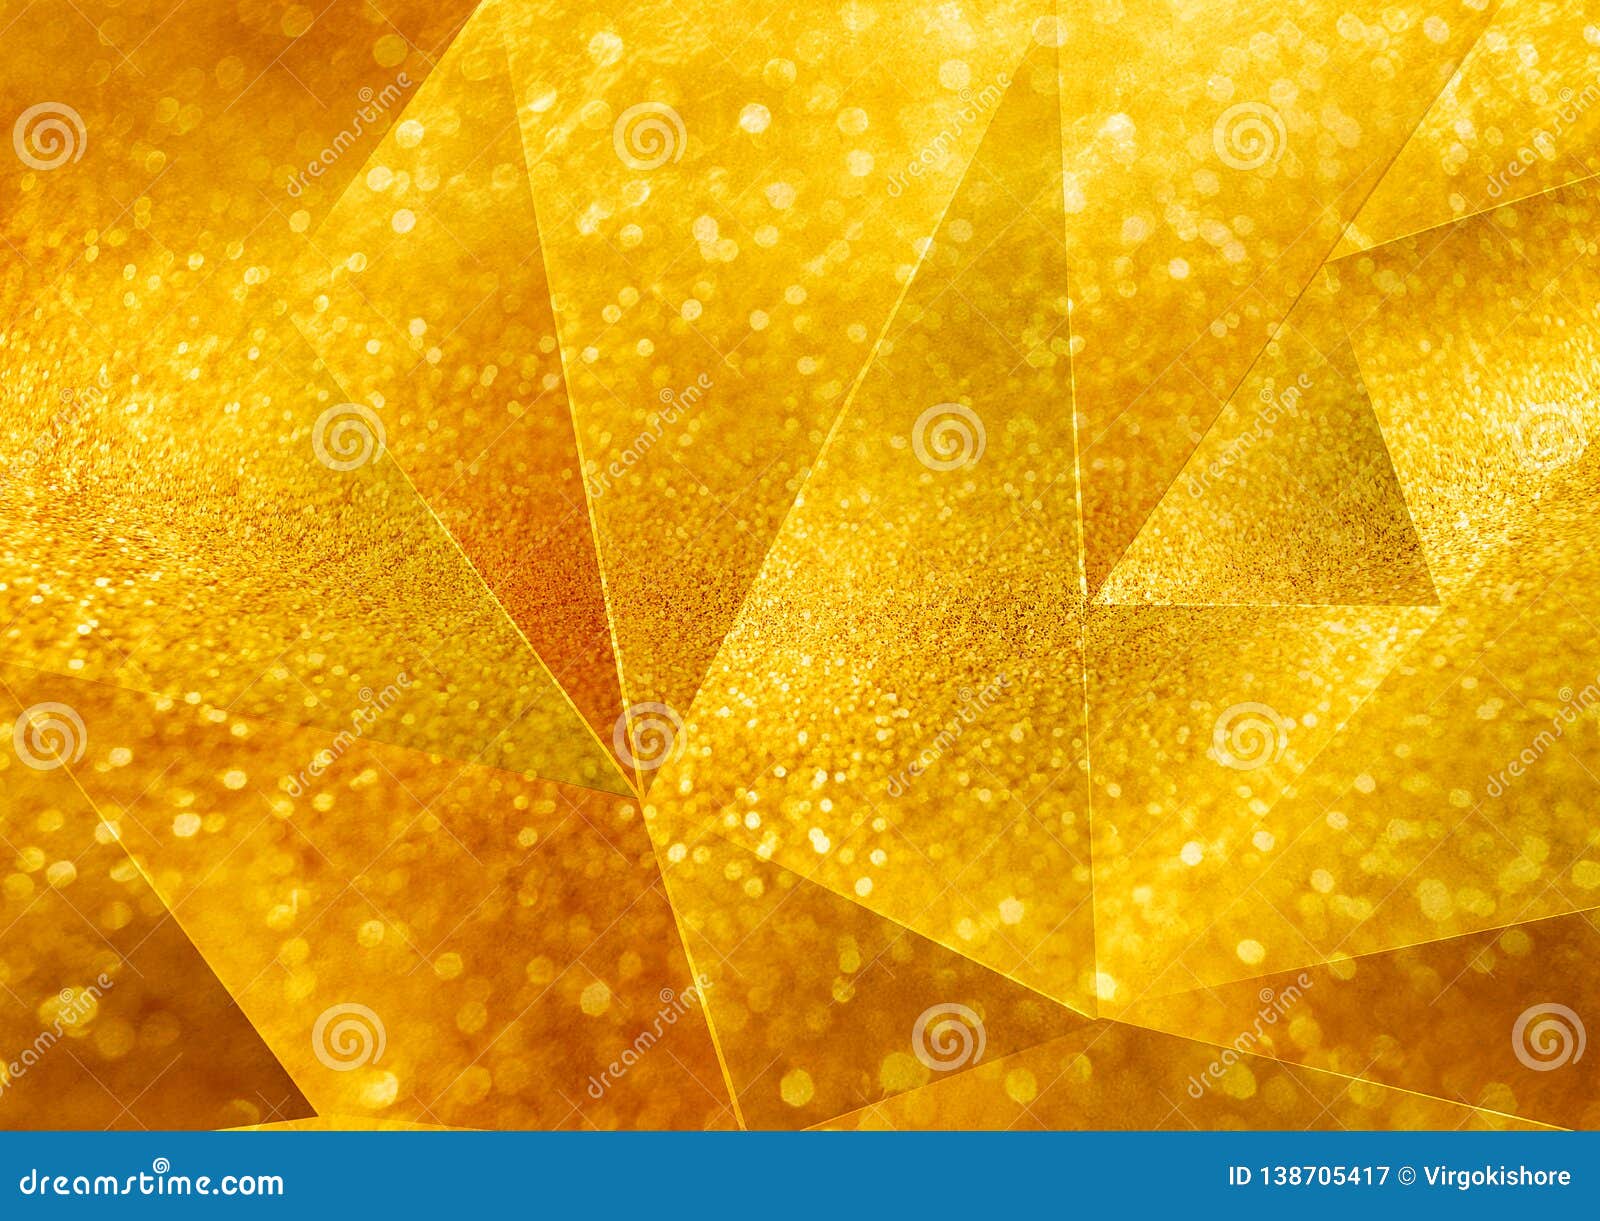 gold glitter glow backgorund